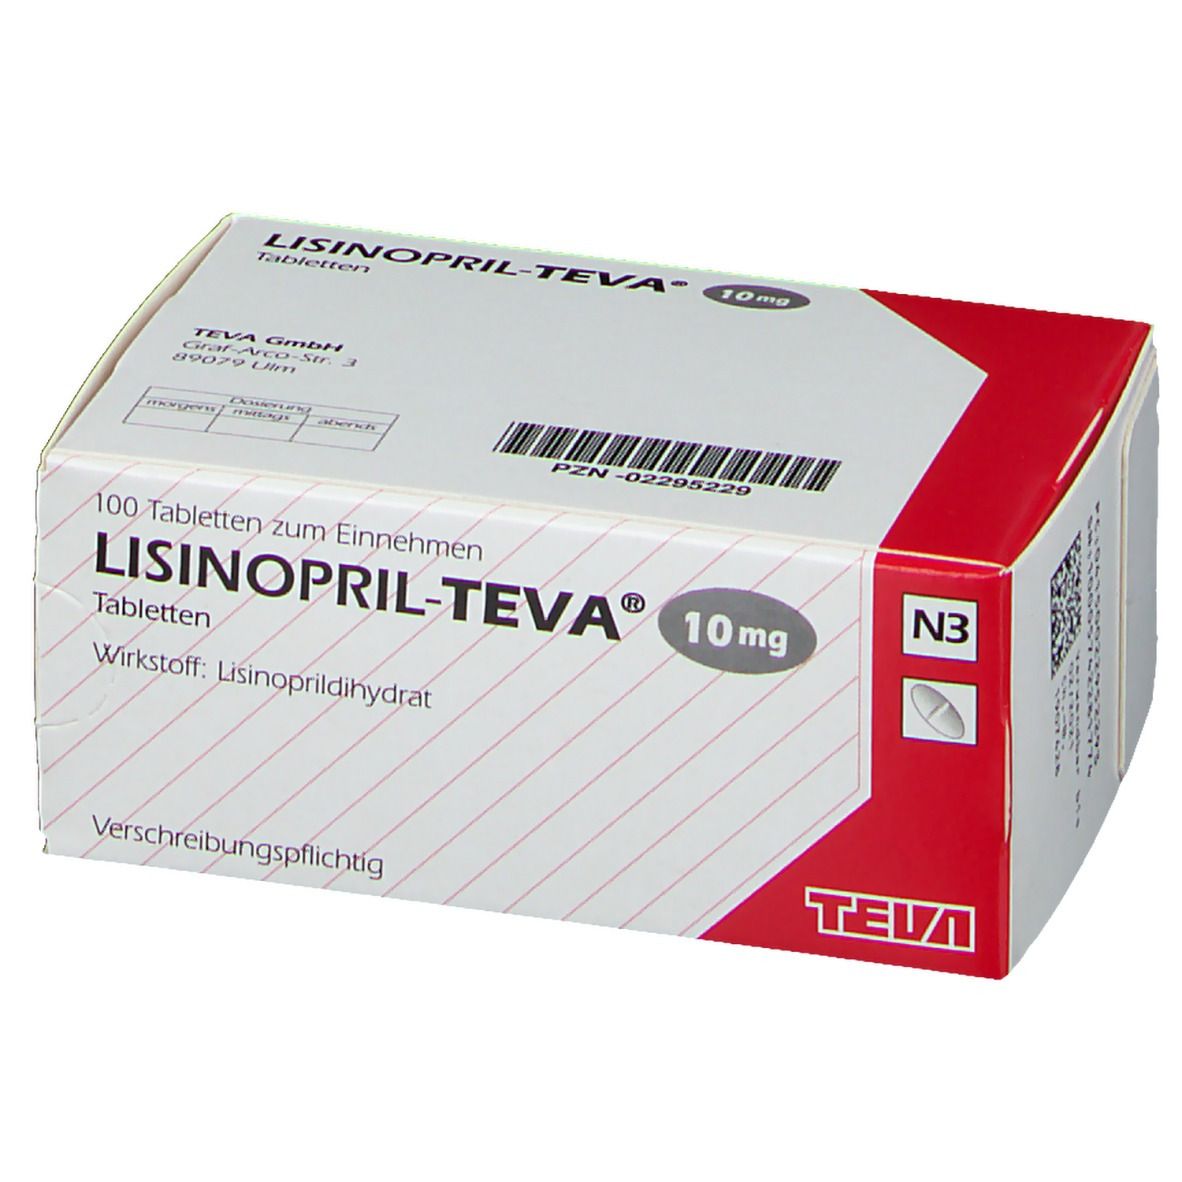 LISINOPRIL-TEVA® 10 mg